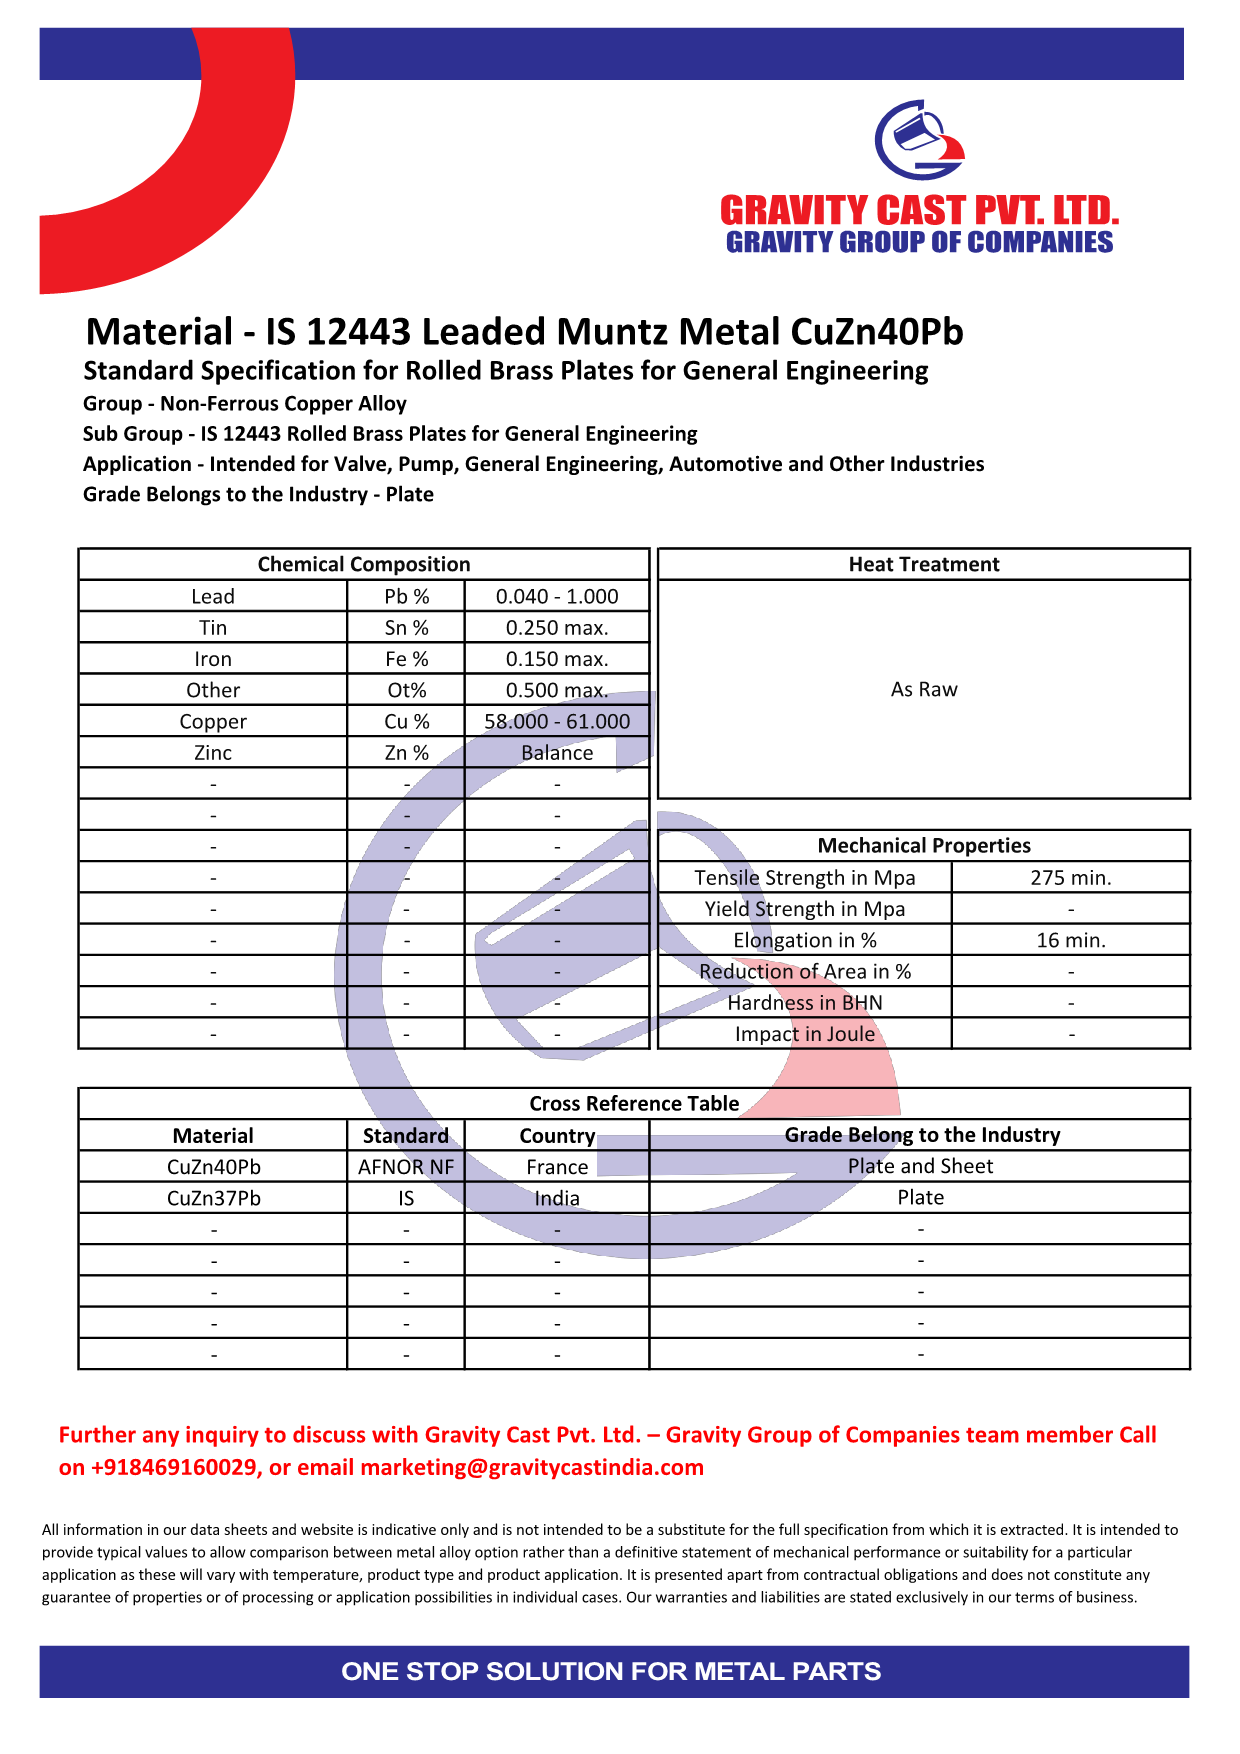 IS 12443 Leaded Muntz Metal CuZn40Pb.pdf